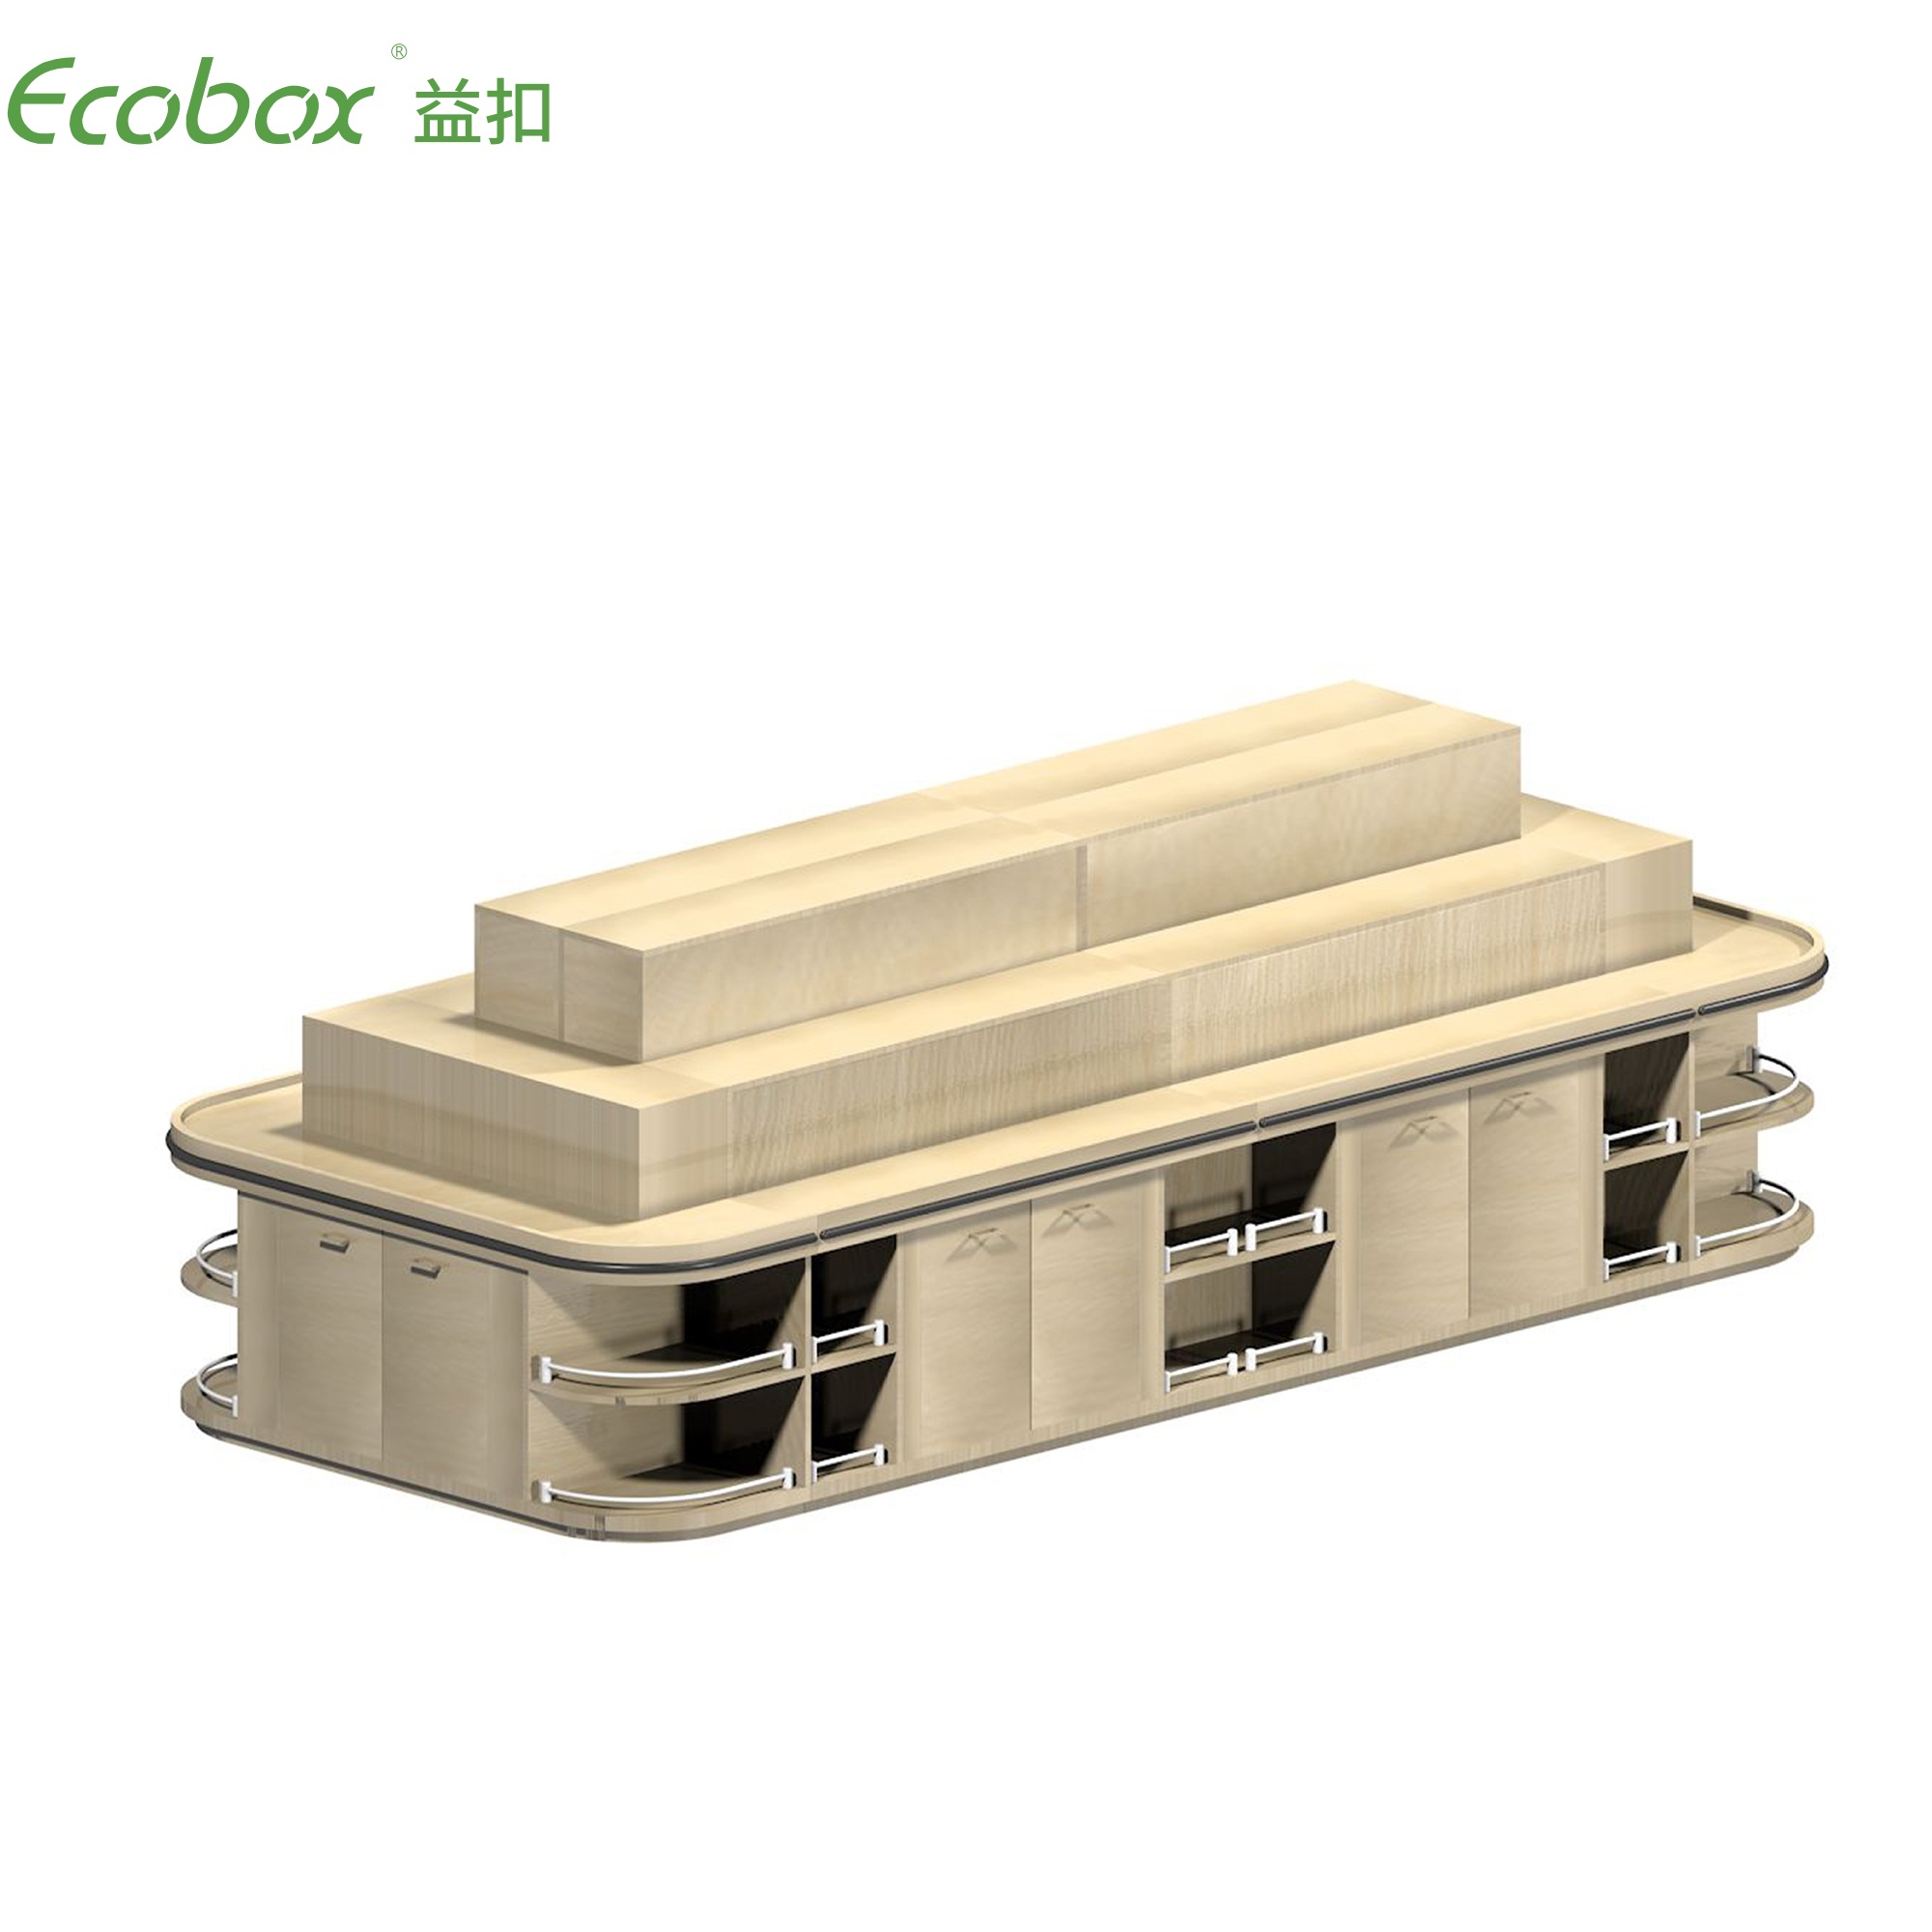 Ecobox G009 supermarket bulk food displays with Ecobox supermarket bins